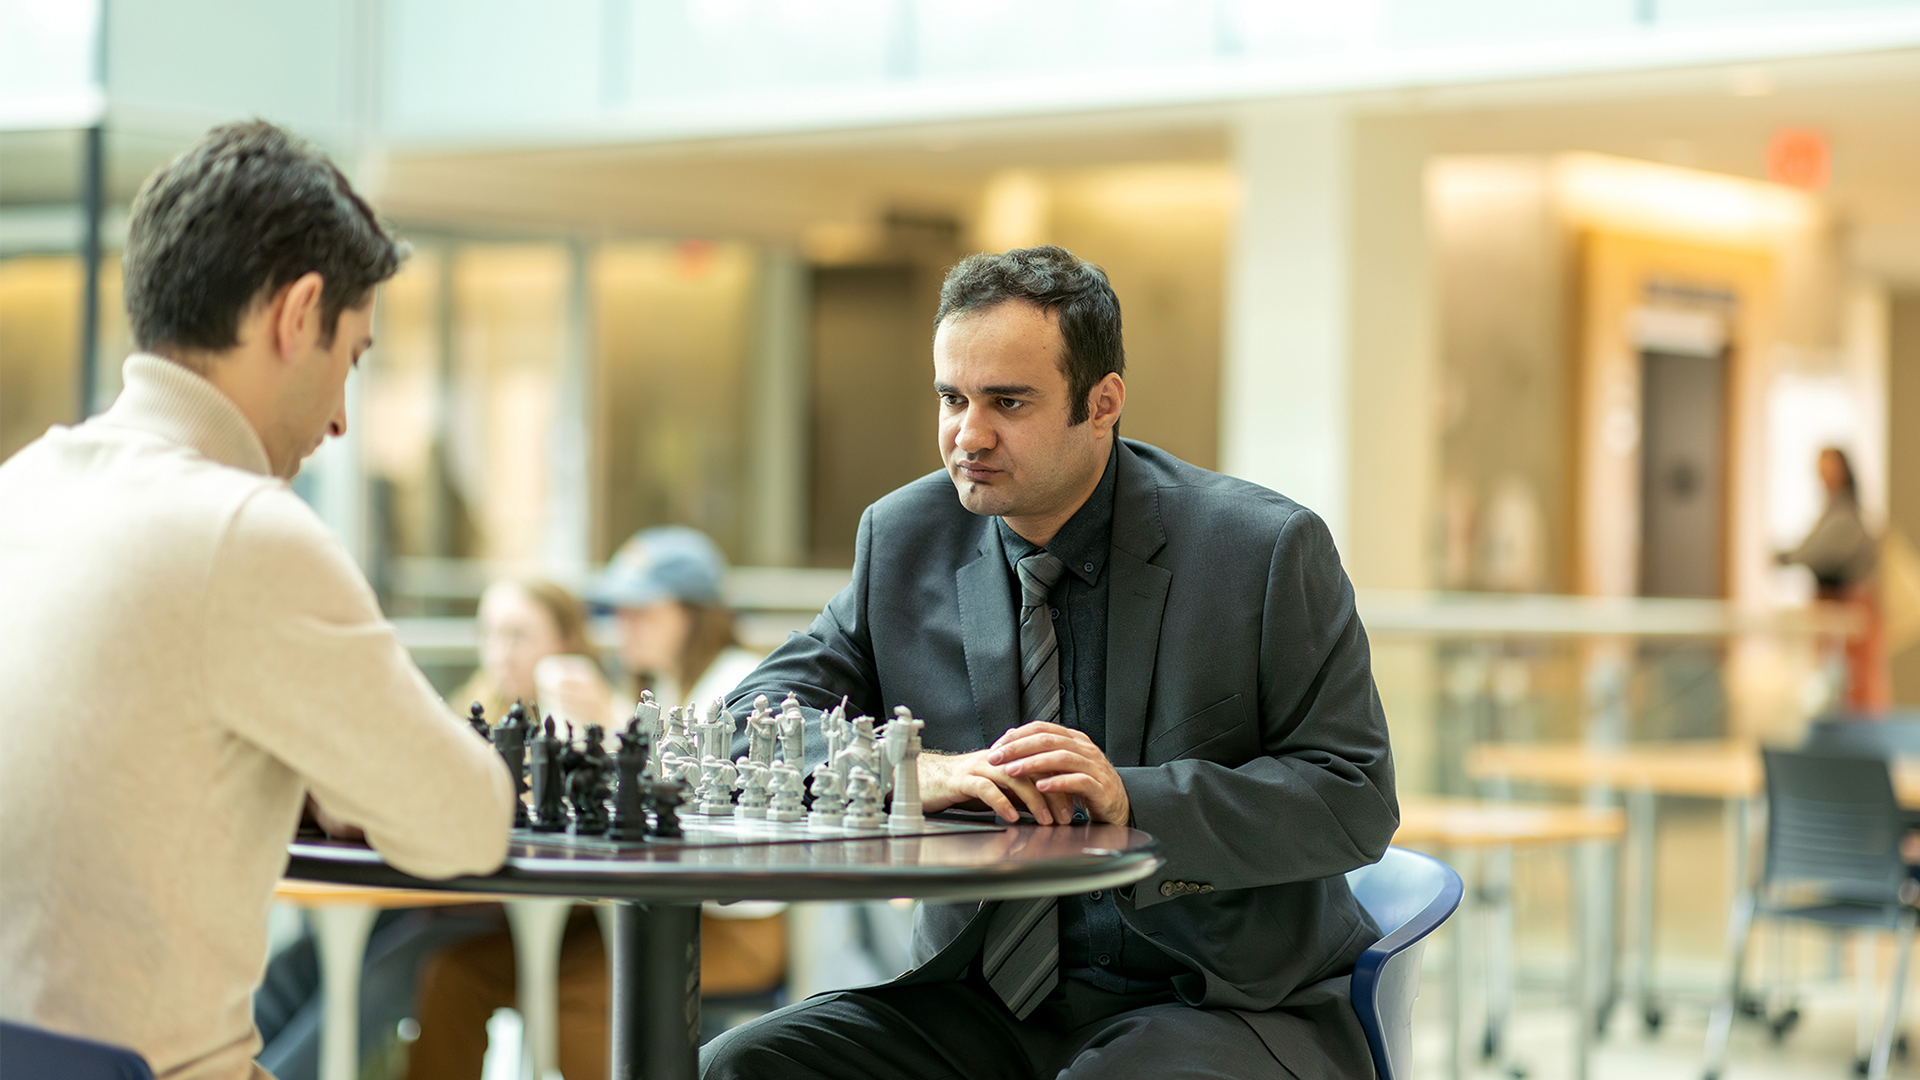 Amir Ardestani-Jaafari and Amin Ahmadi Digehsara playing chess